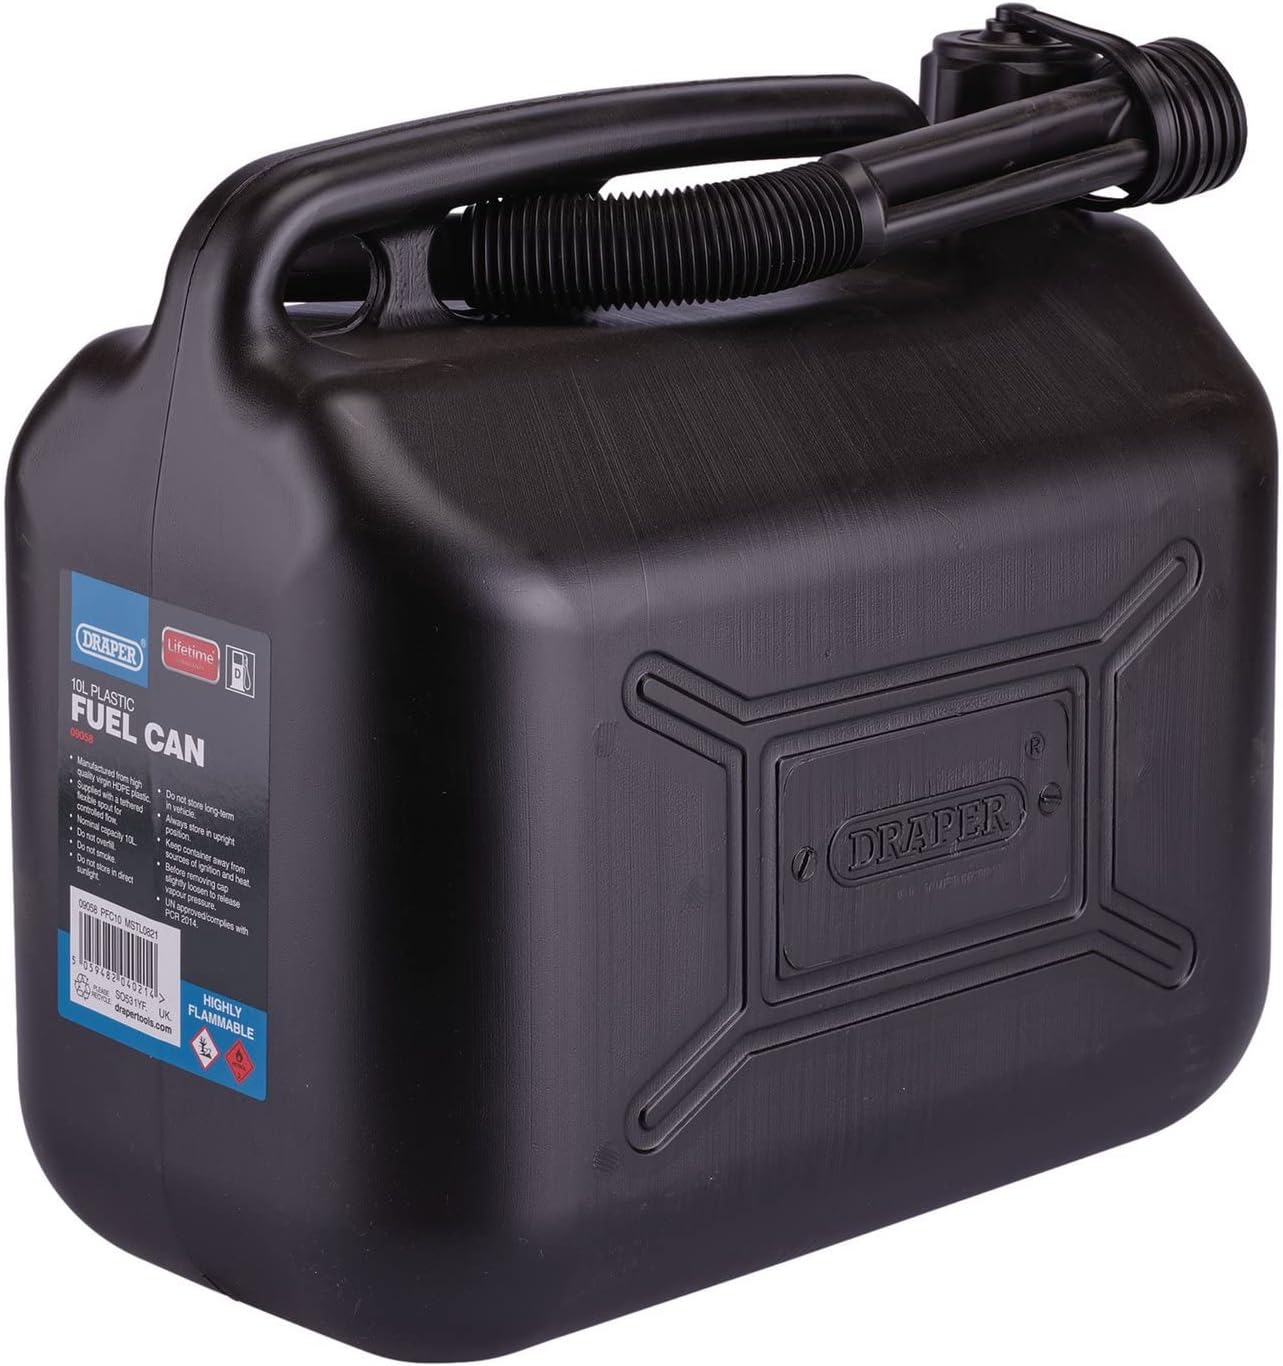 Draper 09058 Plastic Fuel Can, 10L, Black, One Size 0214